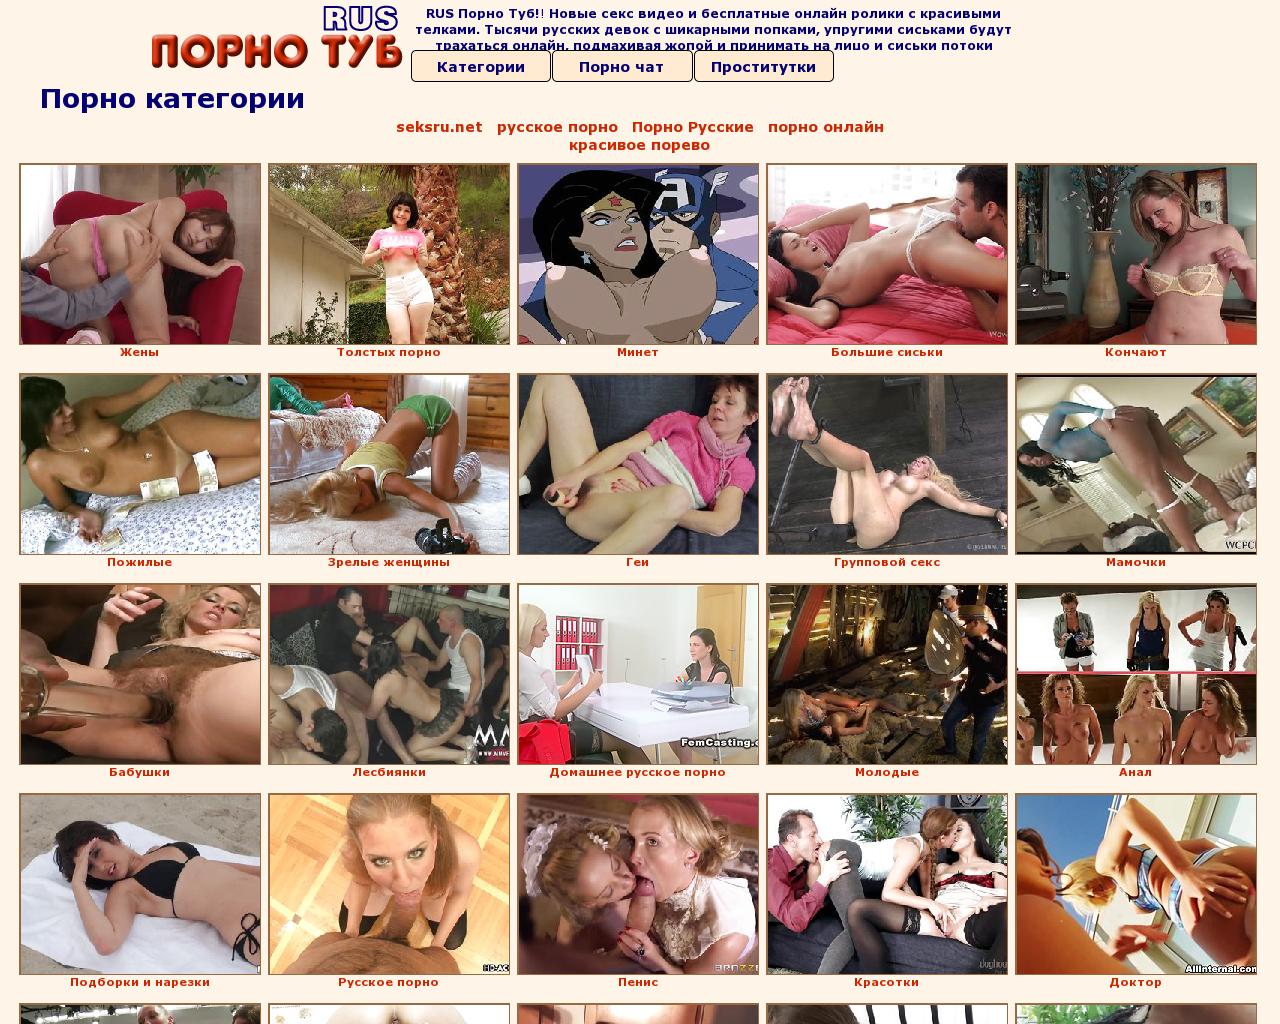 Russianporn sites